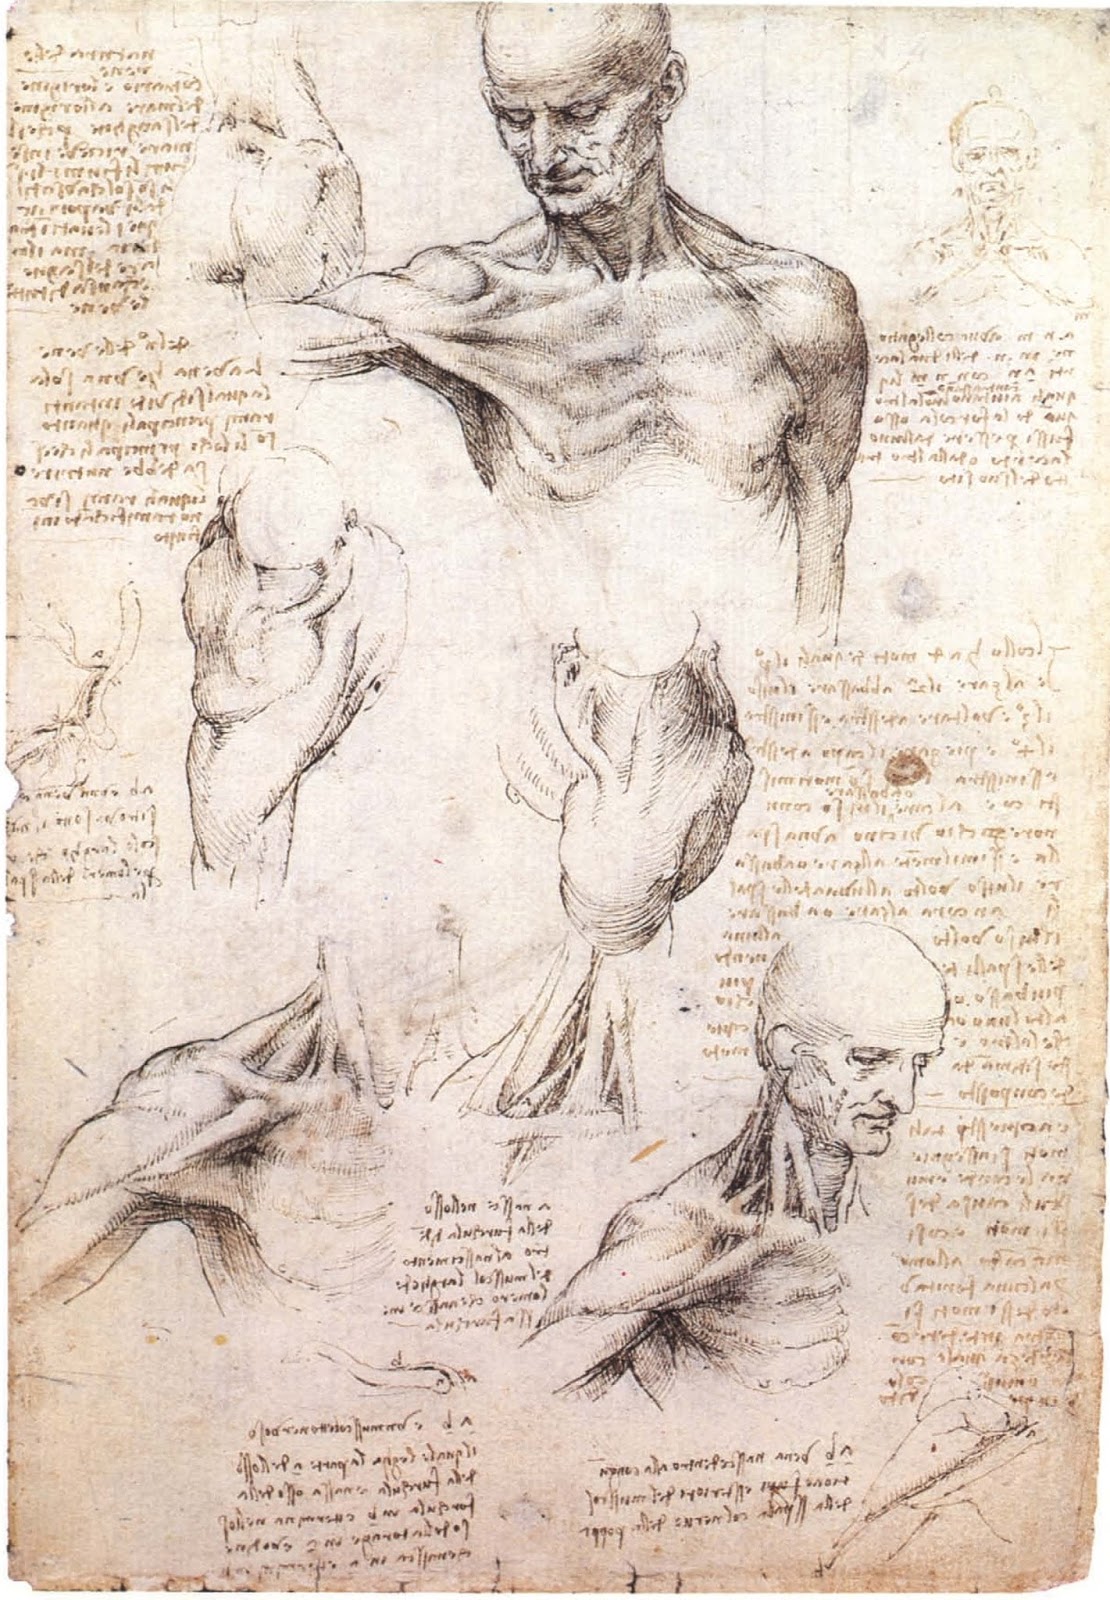 Leonardo+da+Vinci-1452-1519 (739).jpg